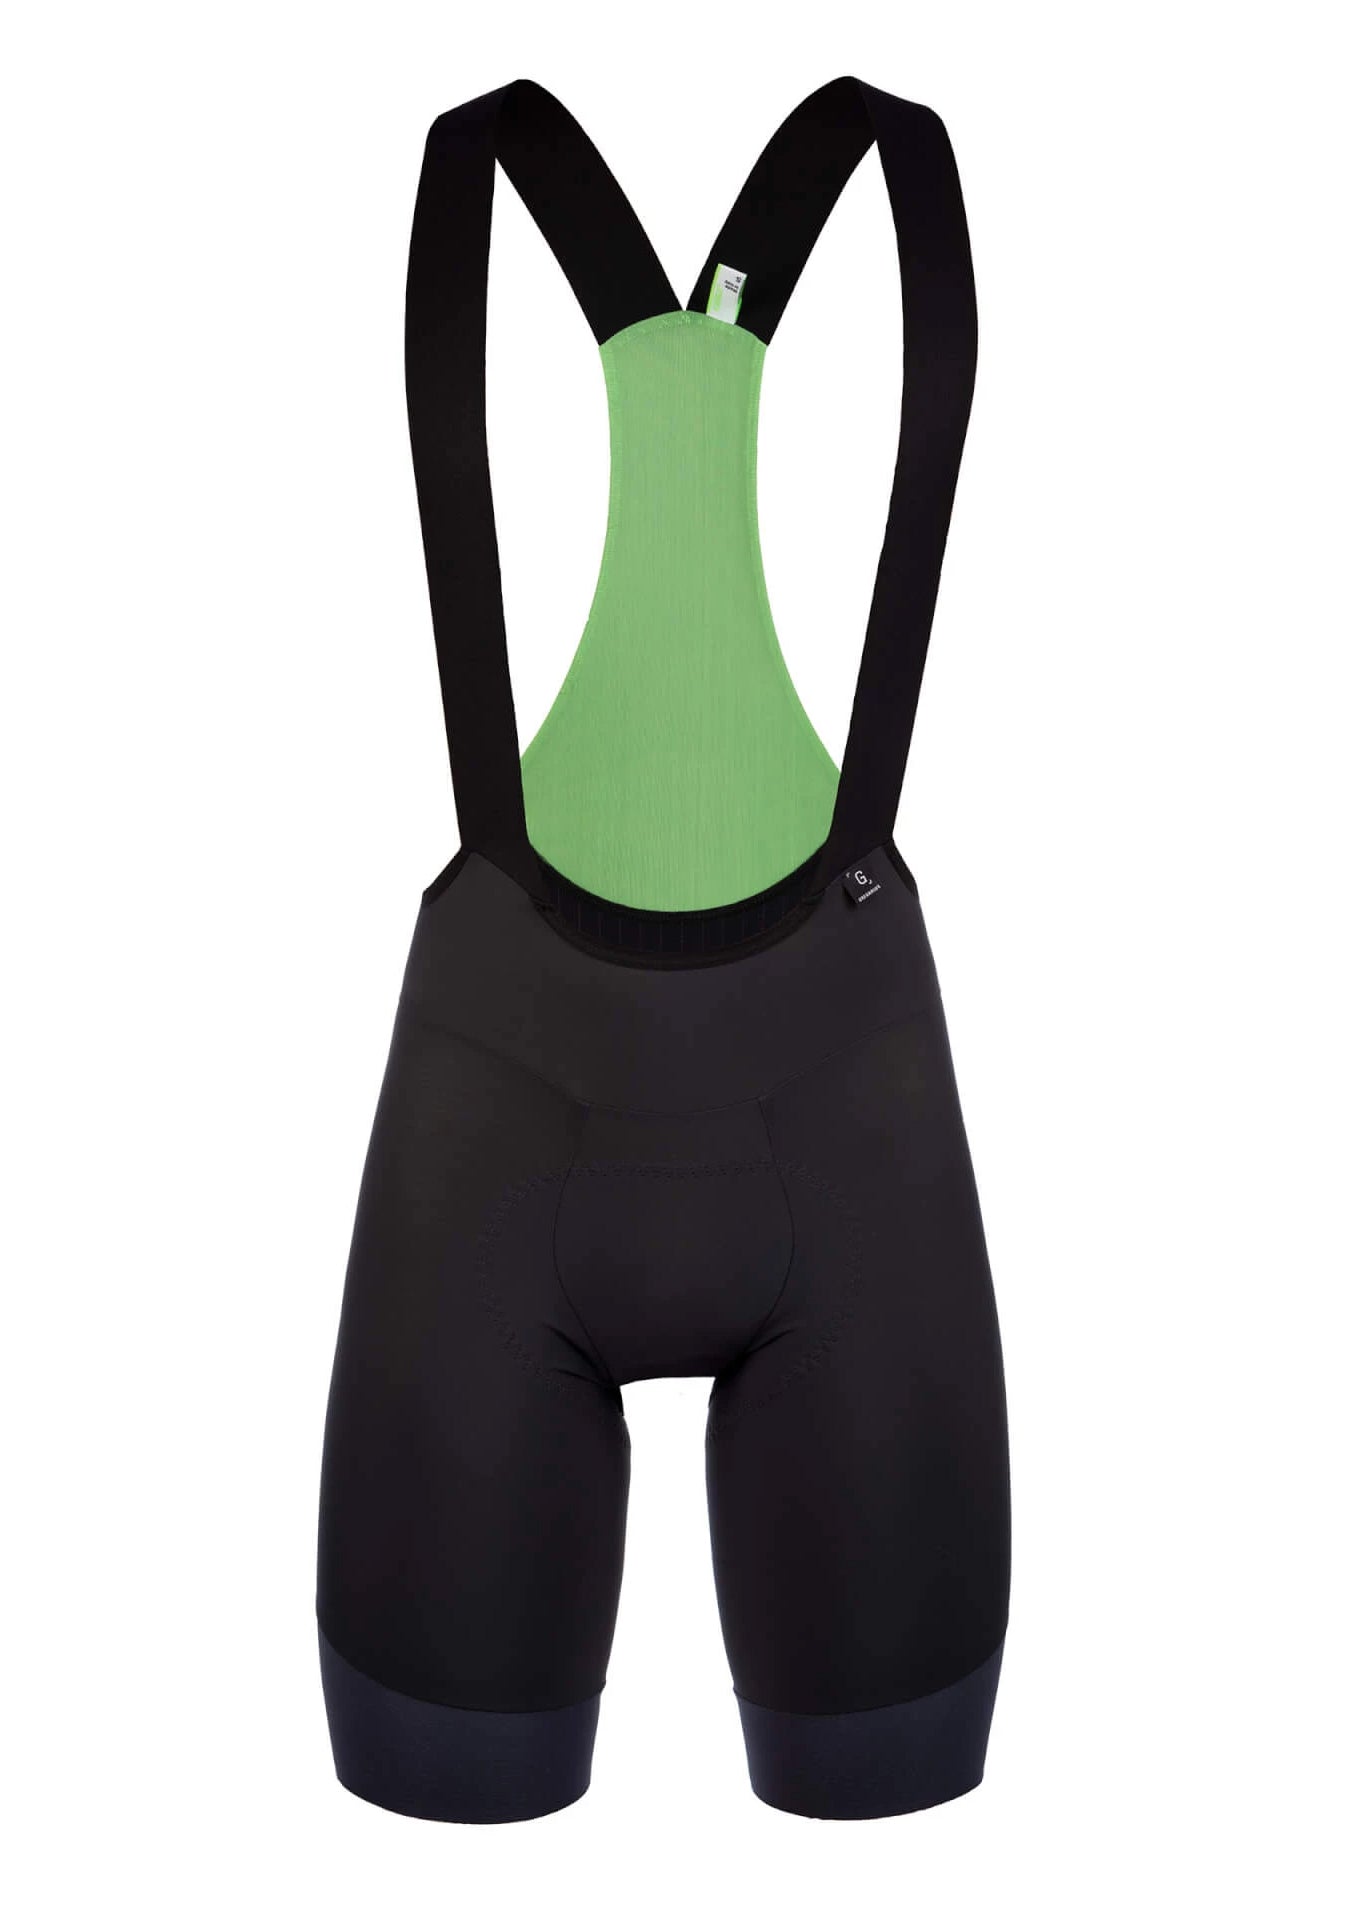 The front of a pair of Q36.5 black cycling bib shorts